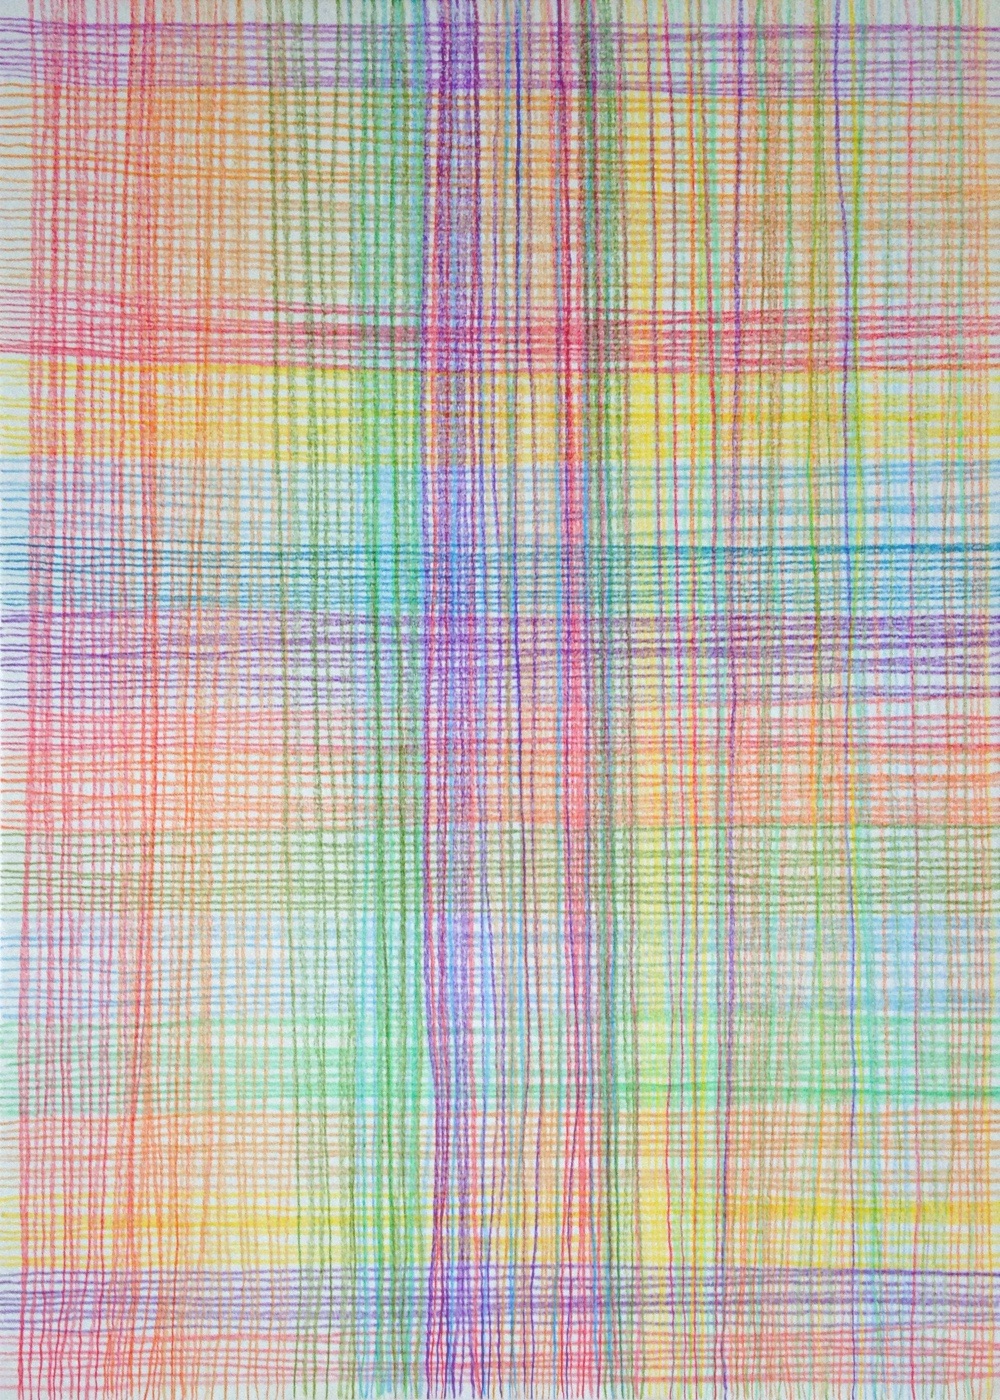 simone hamann_strings_textile10_12,7 x 17,7 colorpencil on card 2015